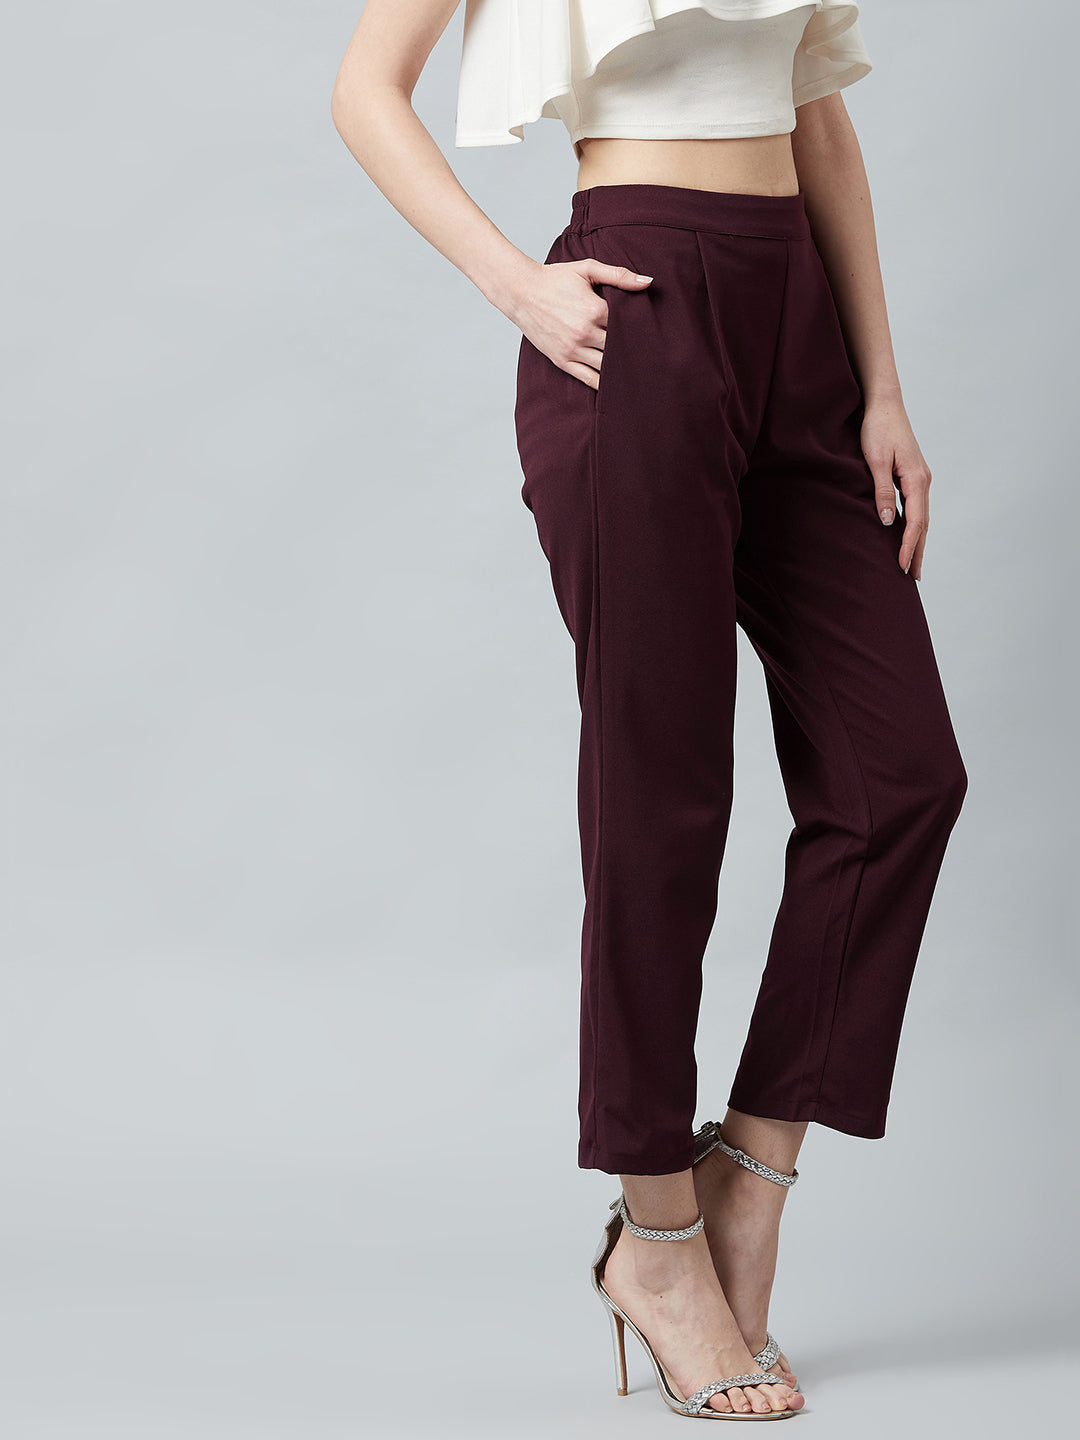 Buy Black Trousers  Pants for Women by Magre Online  Ajiocom